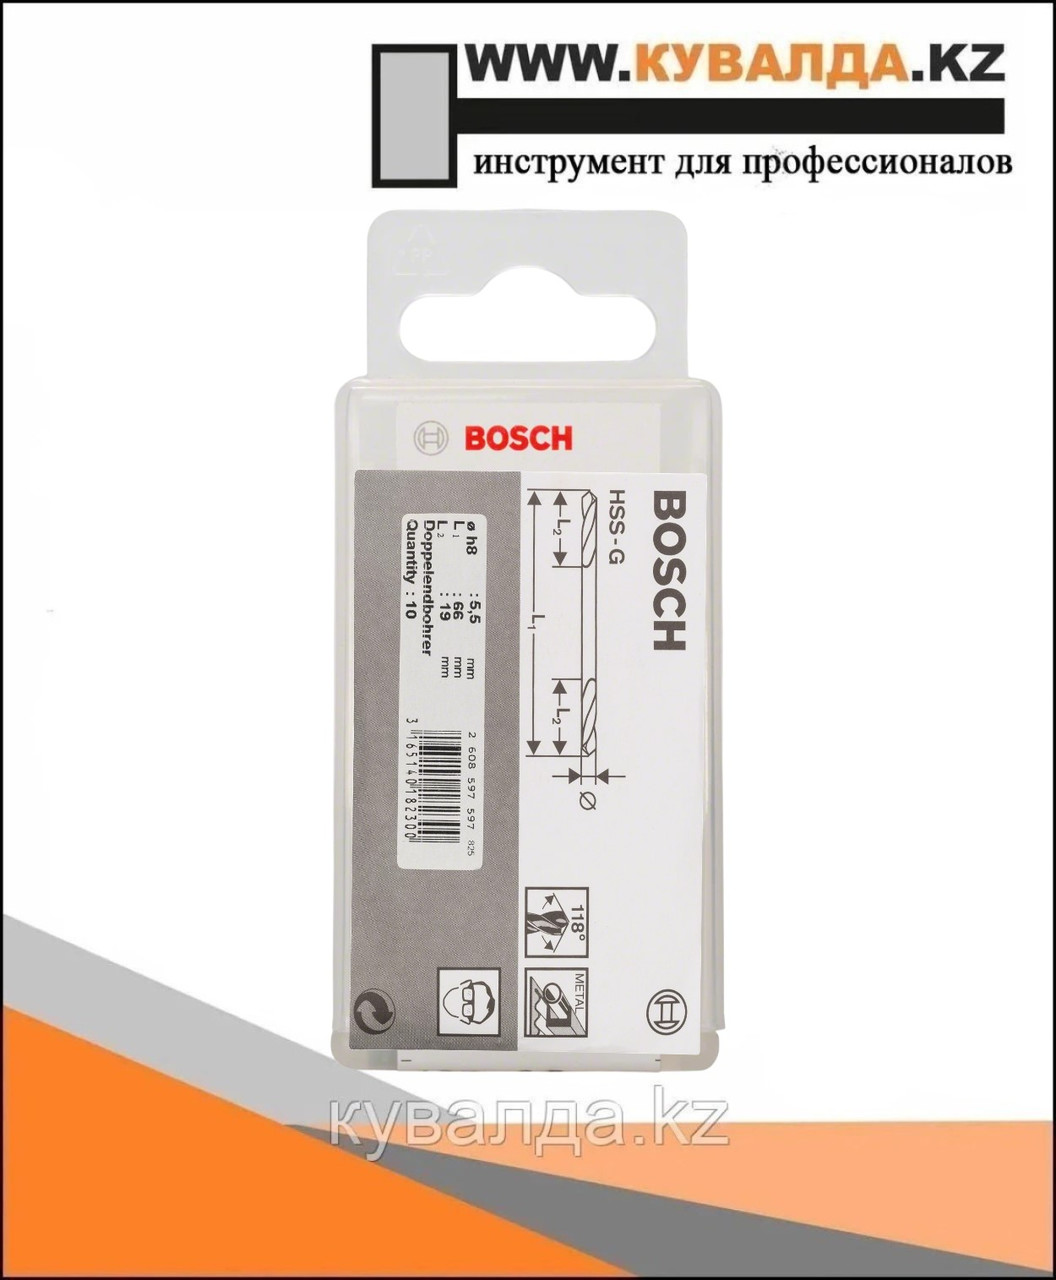 Двустороннее полированное сверло Bosch HSS 5.5x19x66 10шт